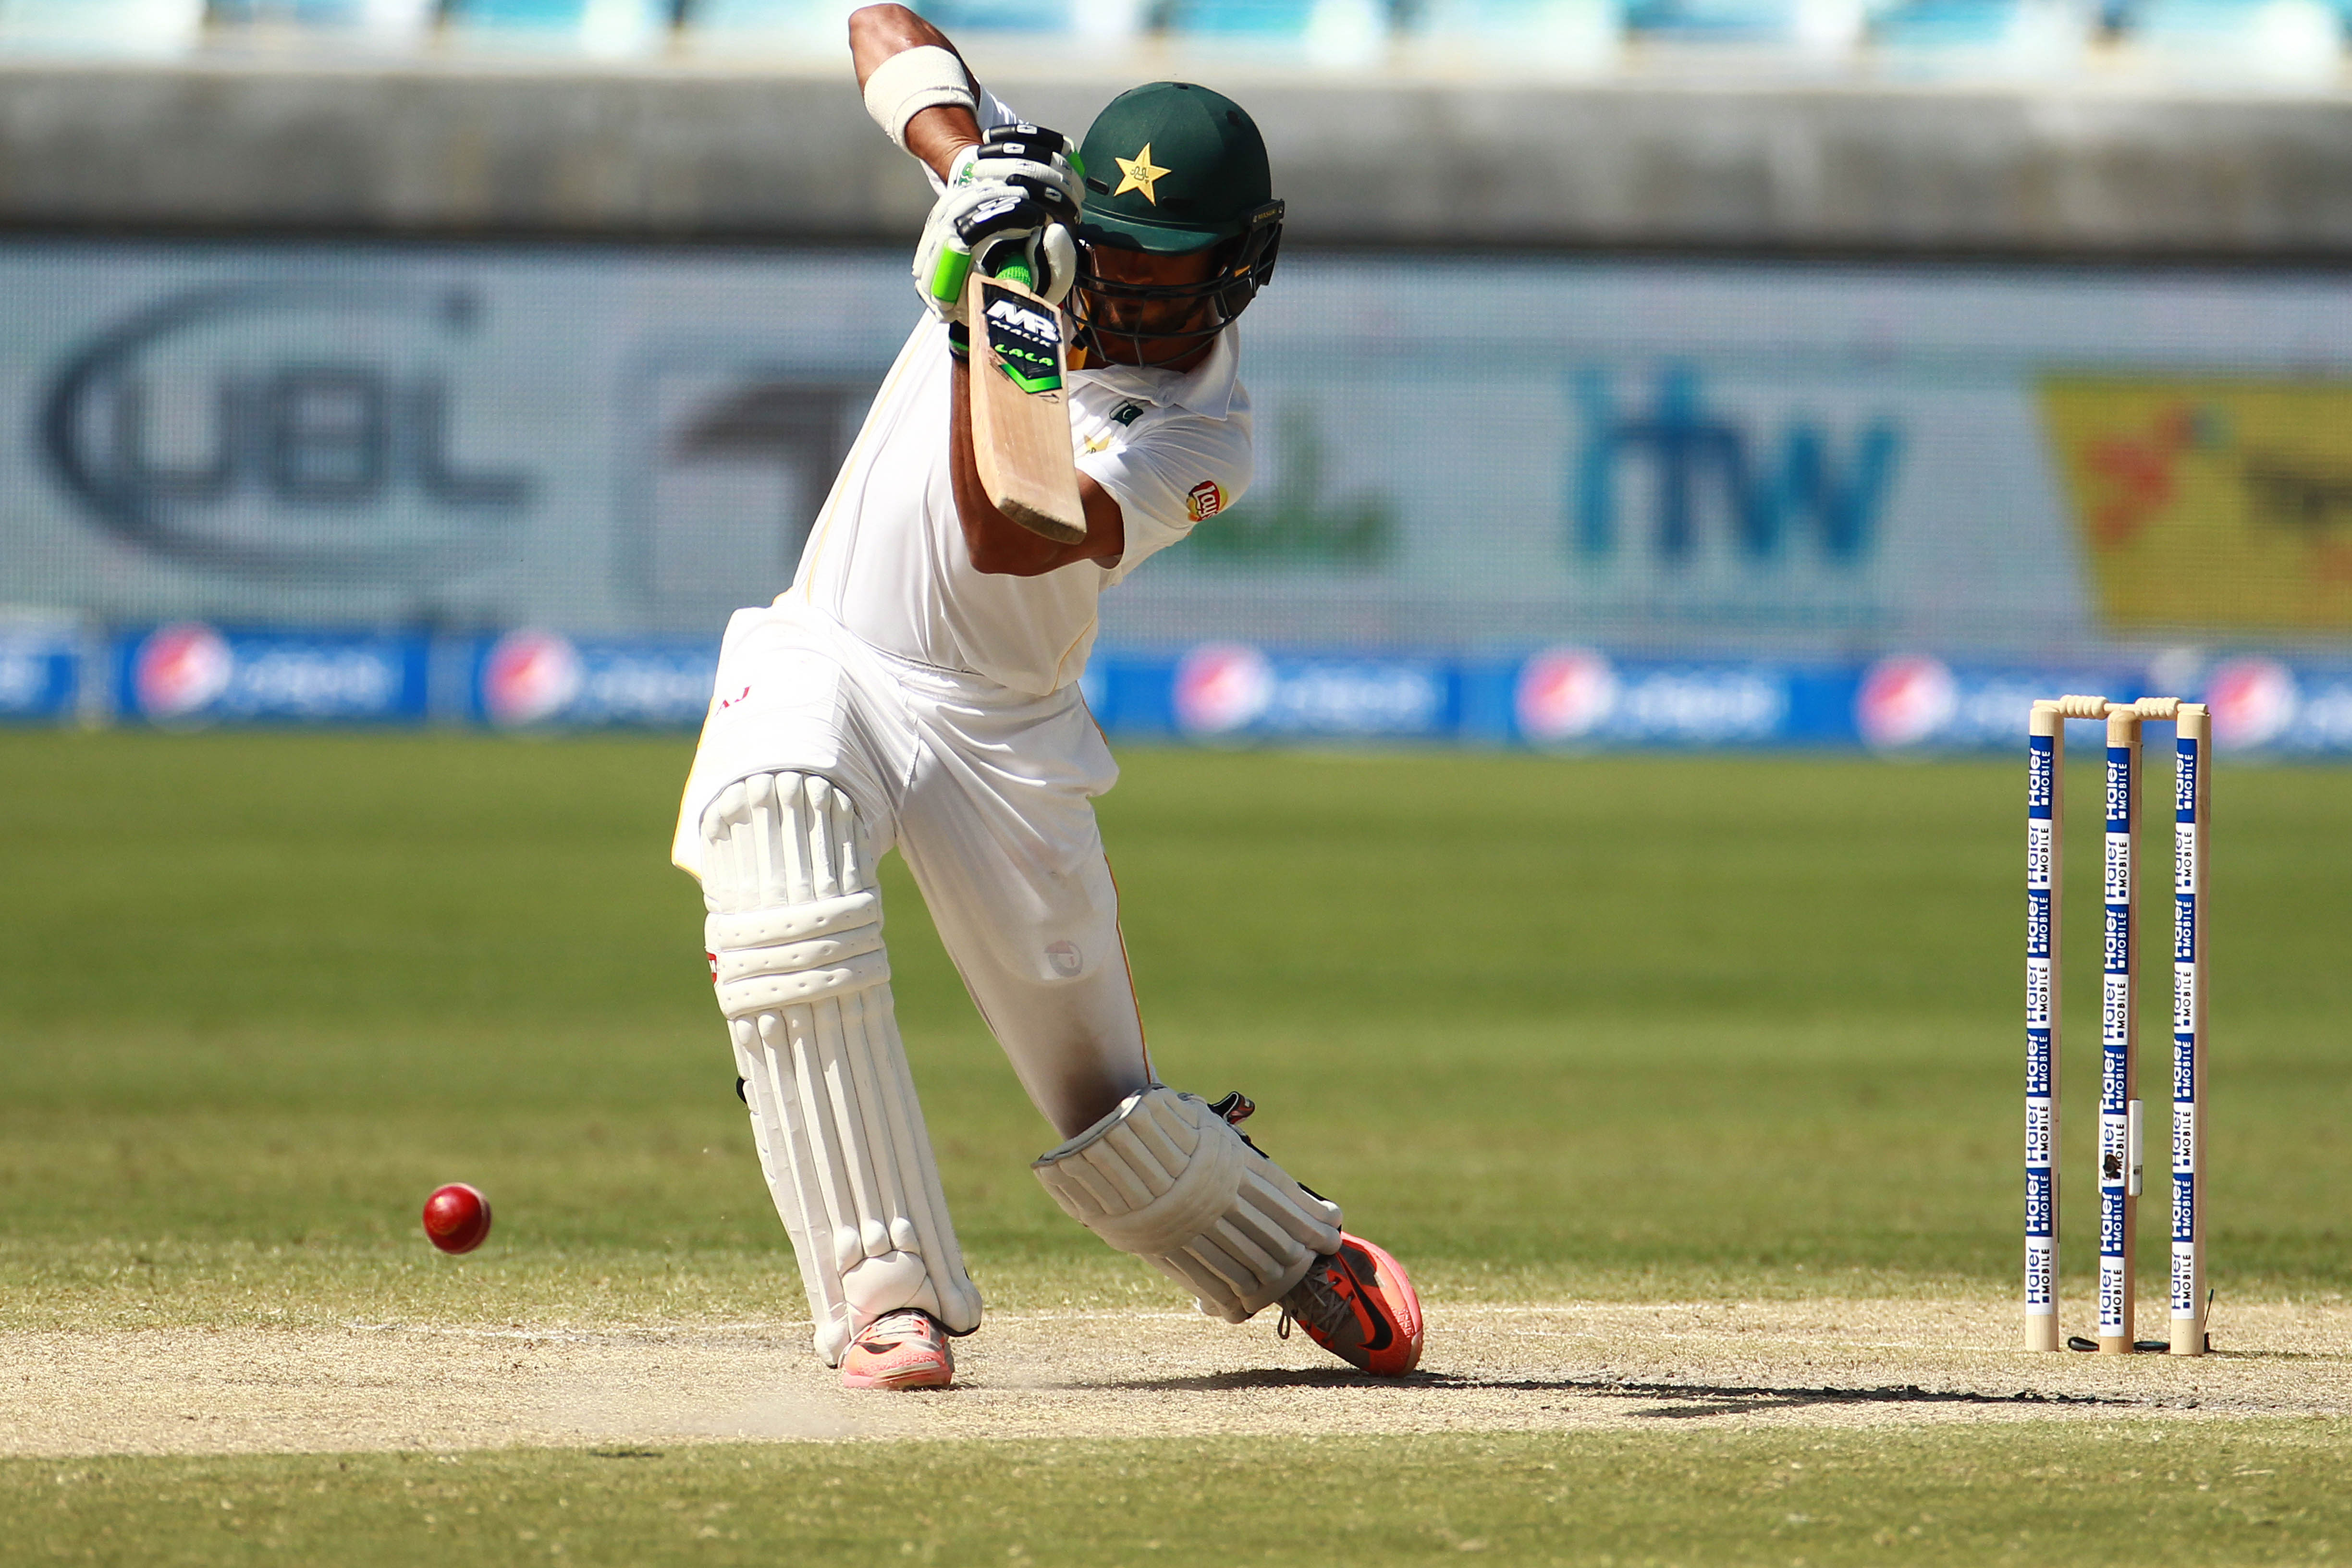 Pakistan's batsman Shan Masood plays a shot during the third day of the second cricket test match against England at the Dubai International Stadium in Dubai, United Arab Emirates, Saturday, Oct. 24, 2015. (AP Photo)